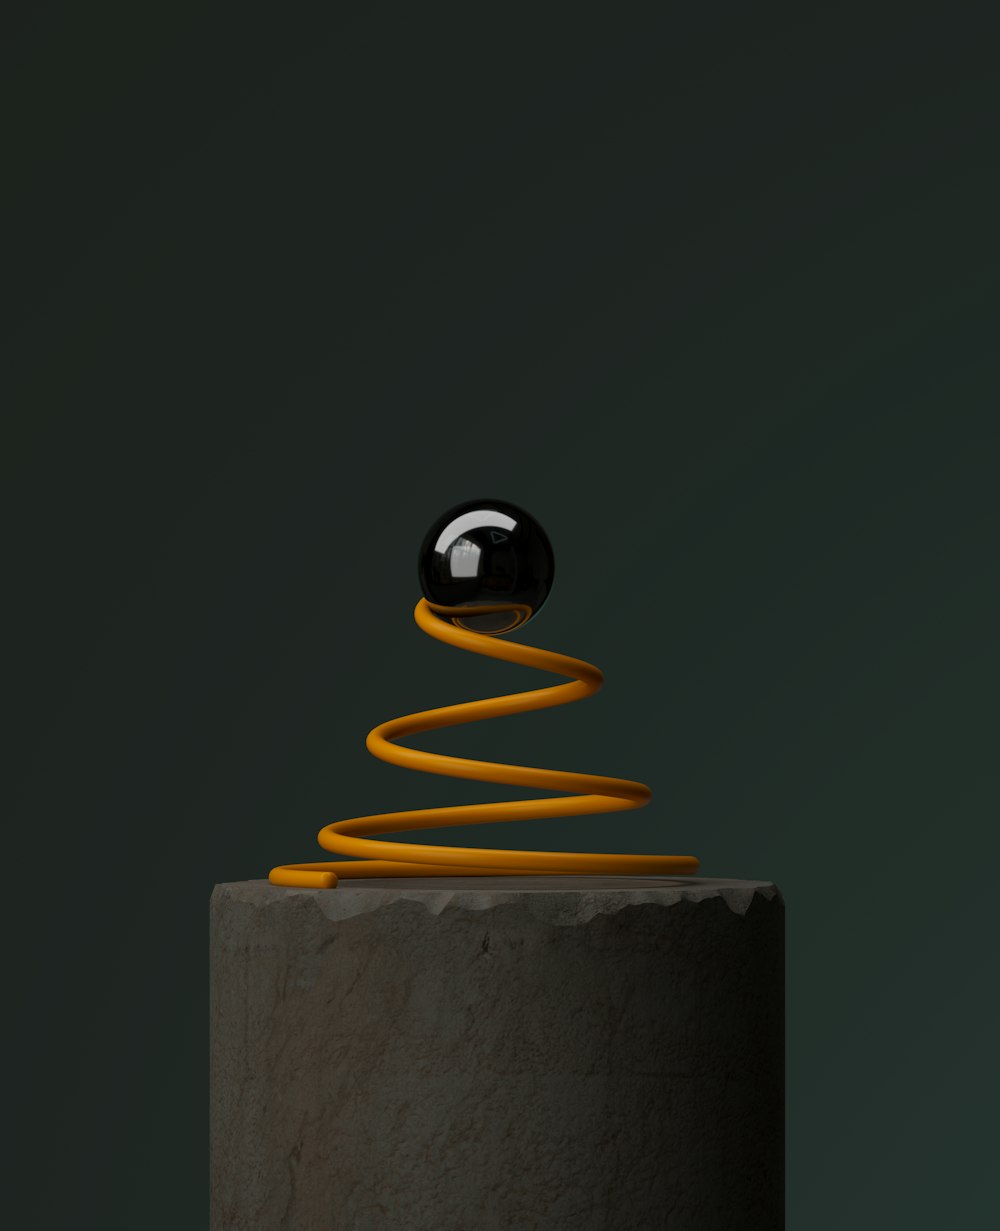 Un objeto negro sentado encima de un pilar de cemento